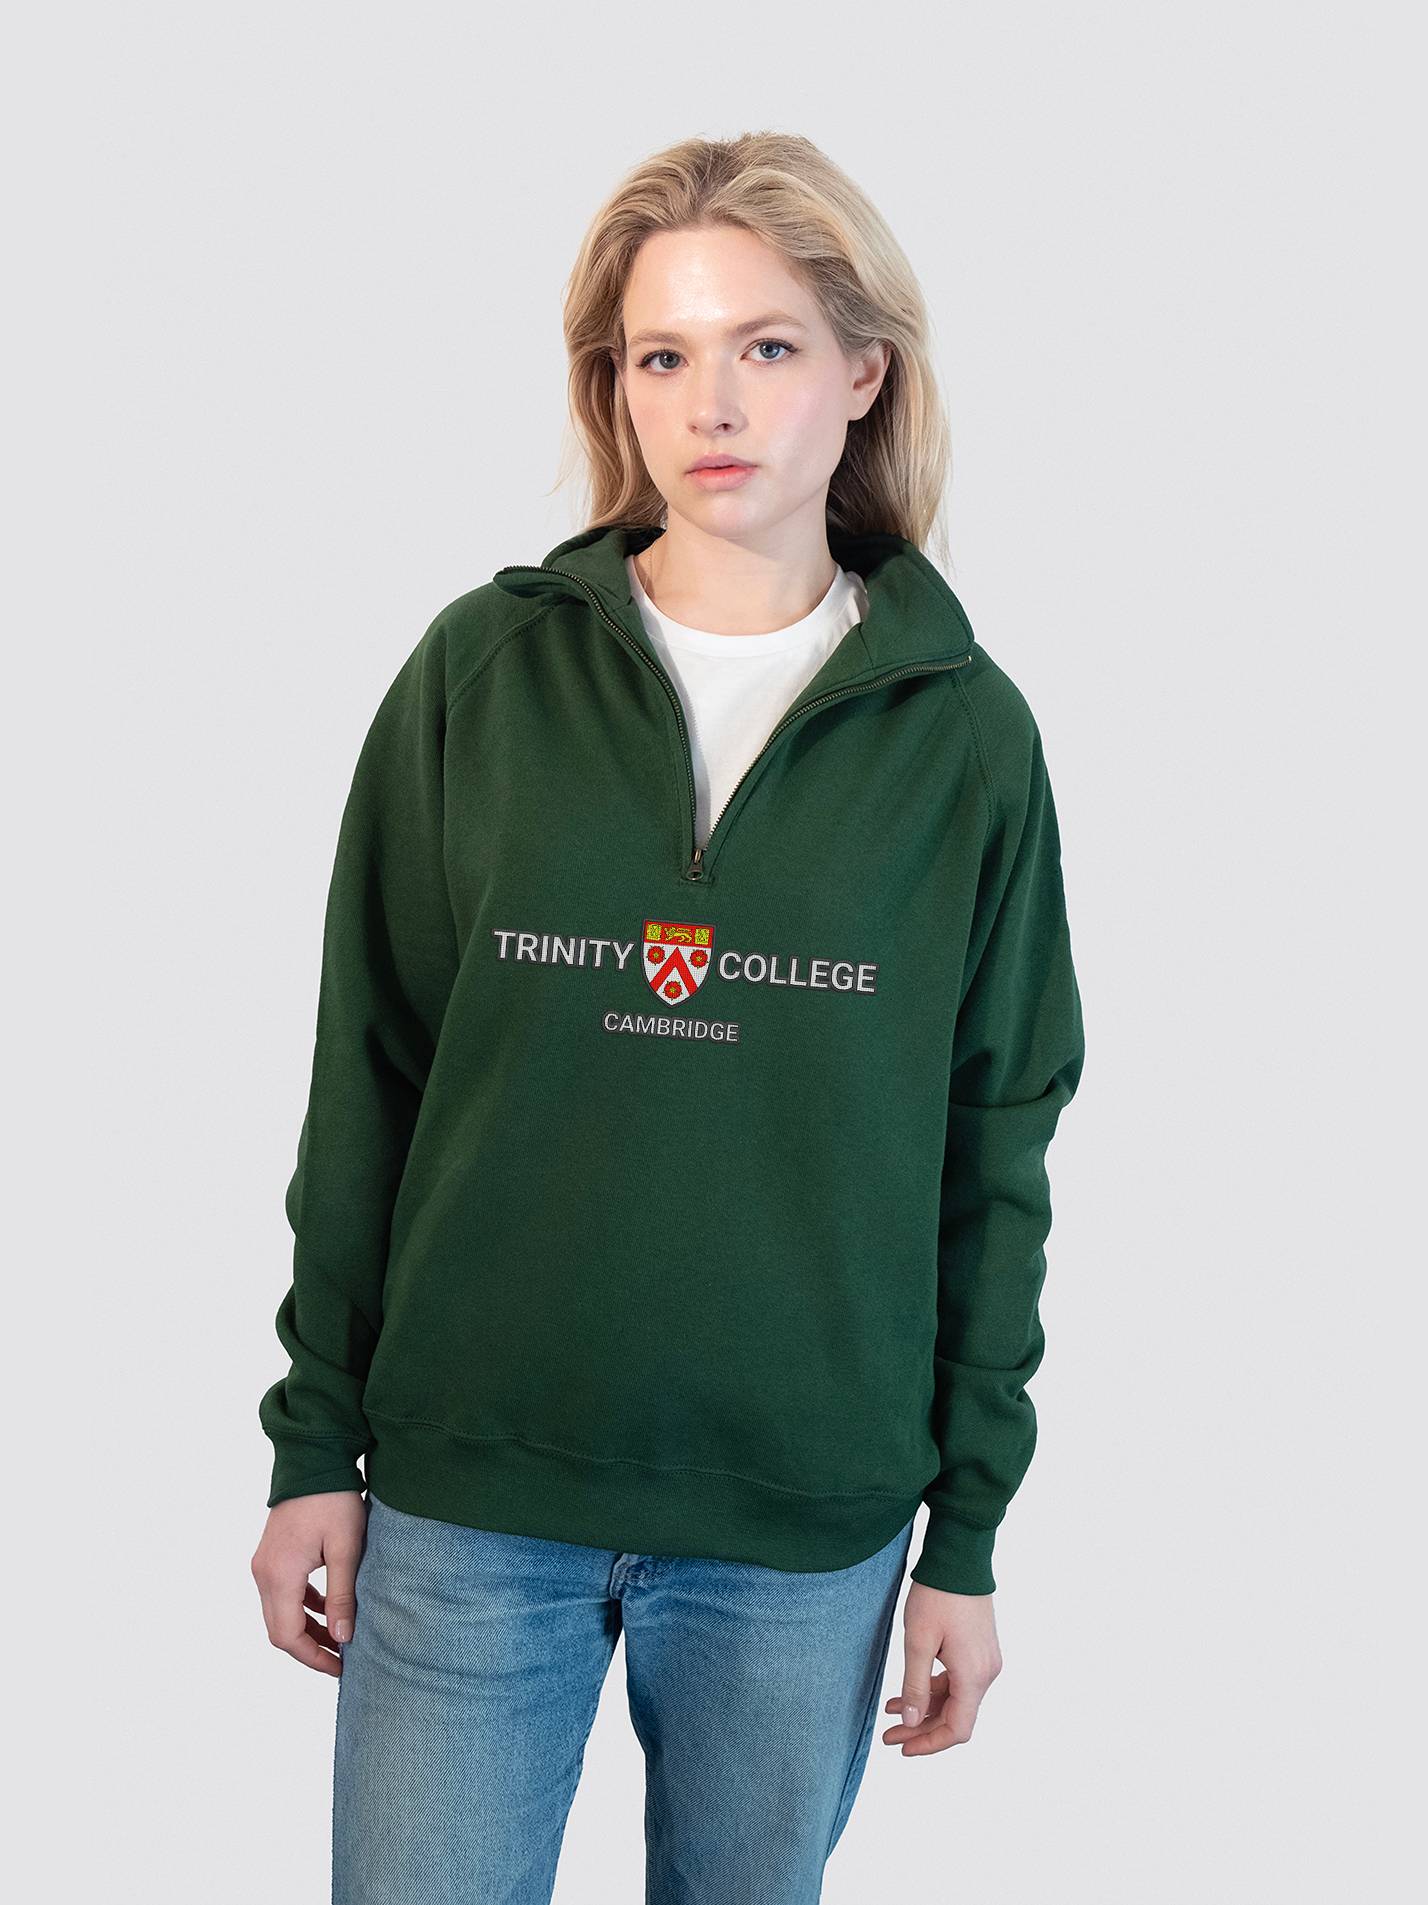 Trinity College Cambridge Heritage Unisex 1/4 Zip Sweatshirt